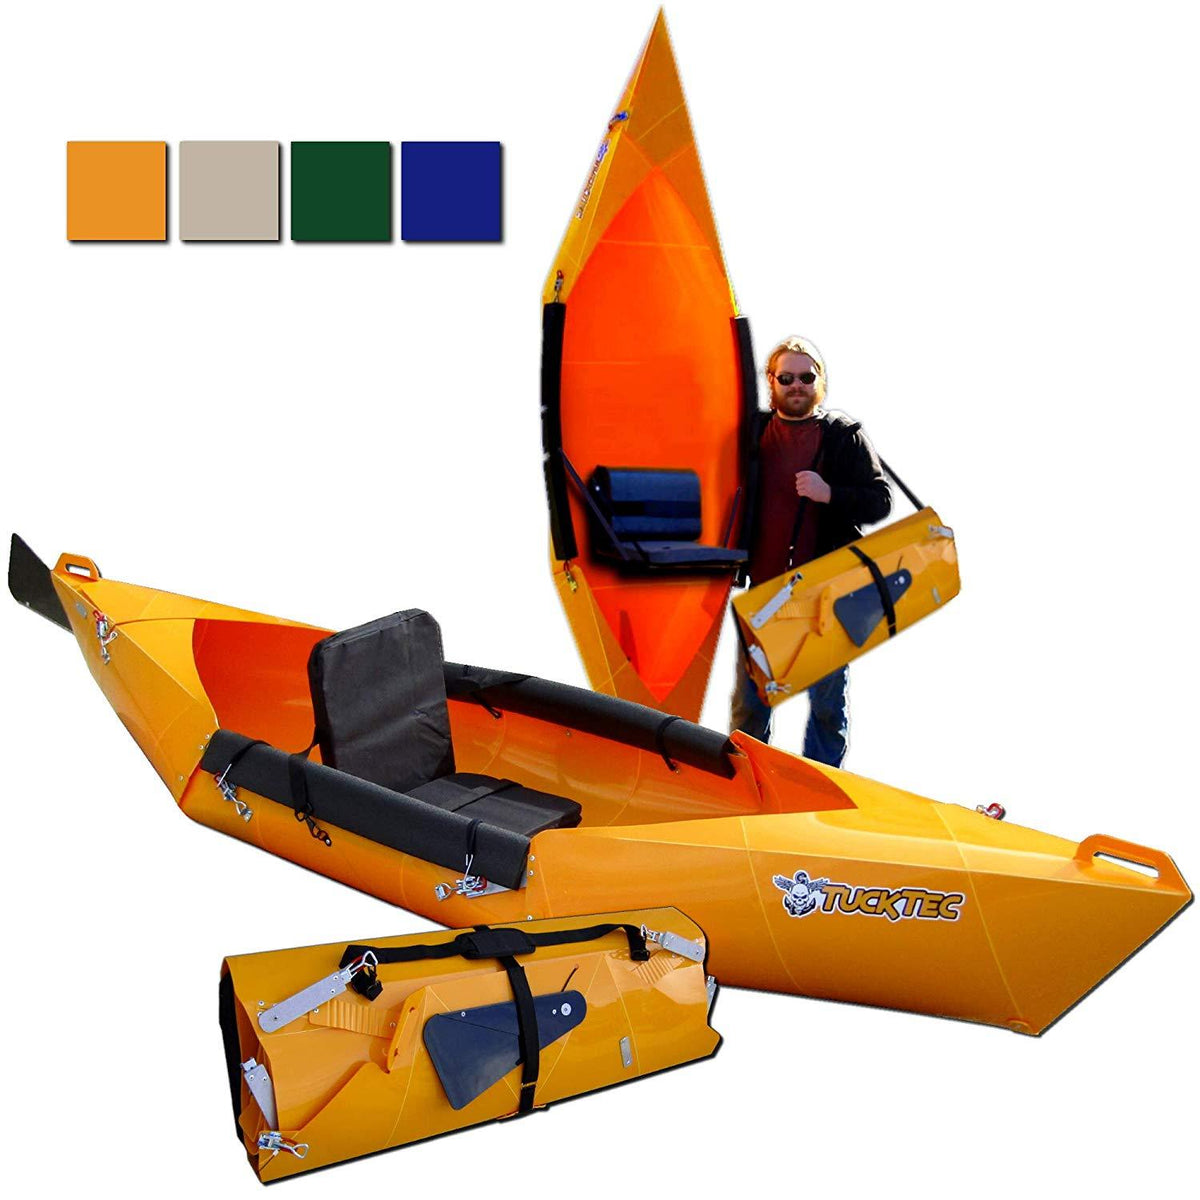 Tucktec Advanced 2020 Model 10 Ft Foldable Kayak Portable Lightweight Canoe Dark Yellow New